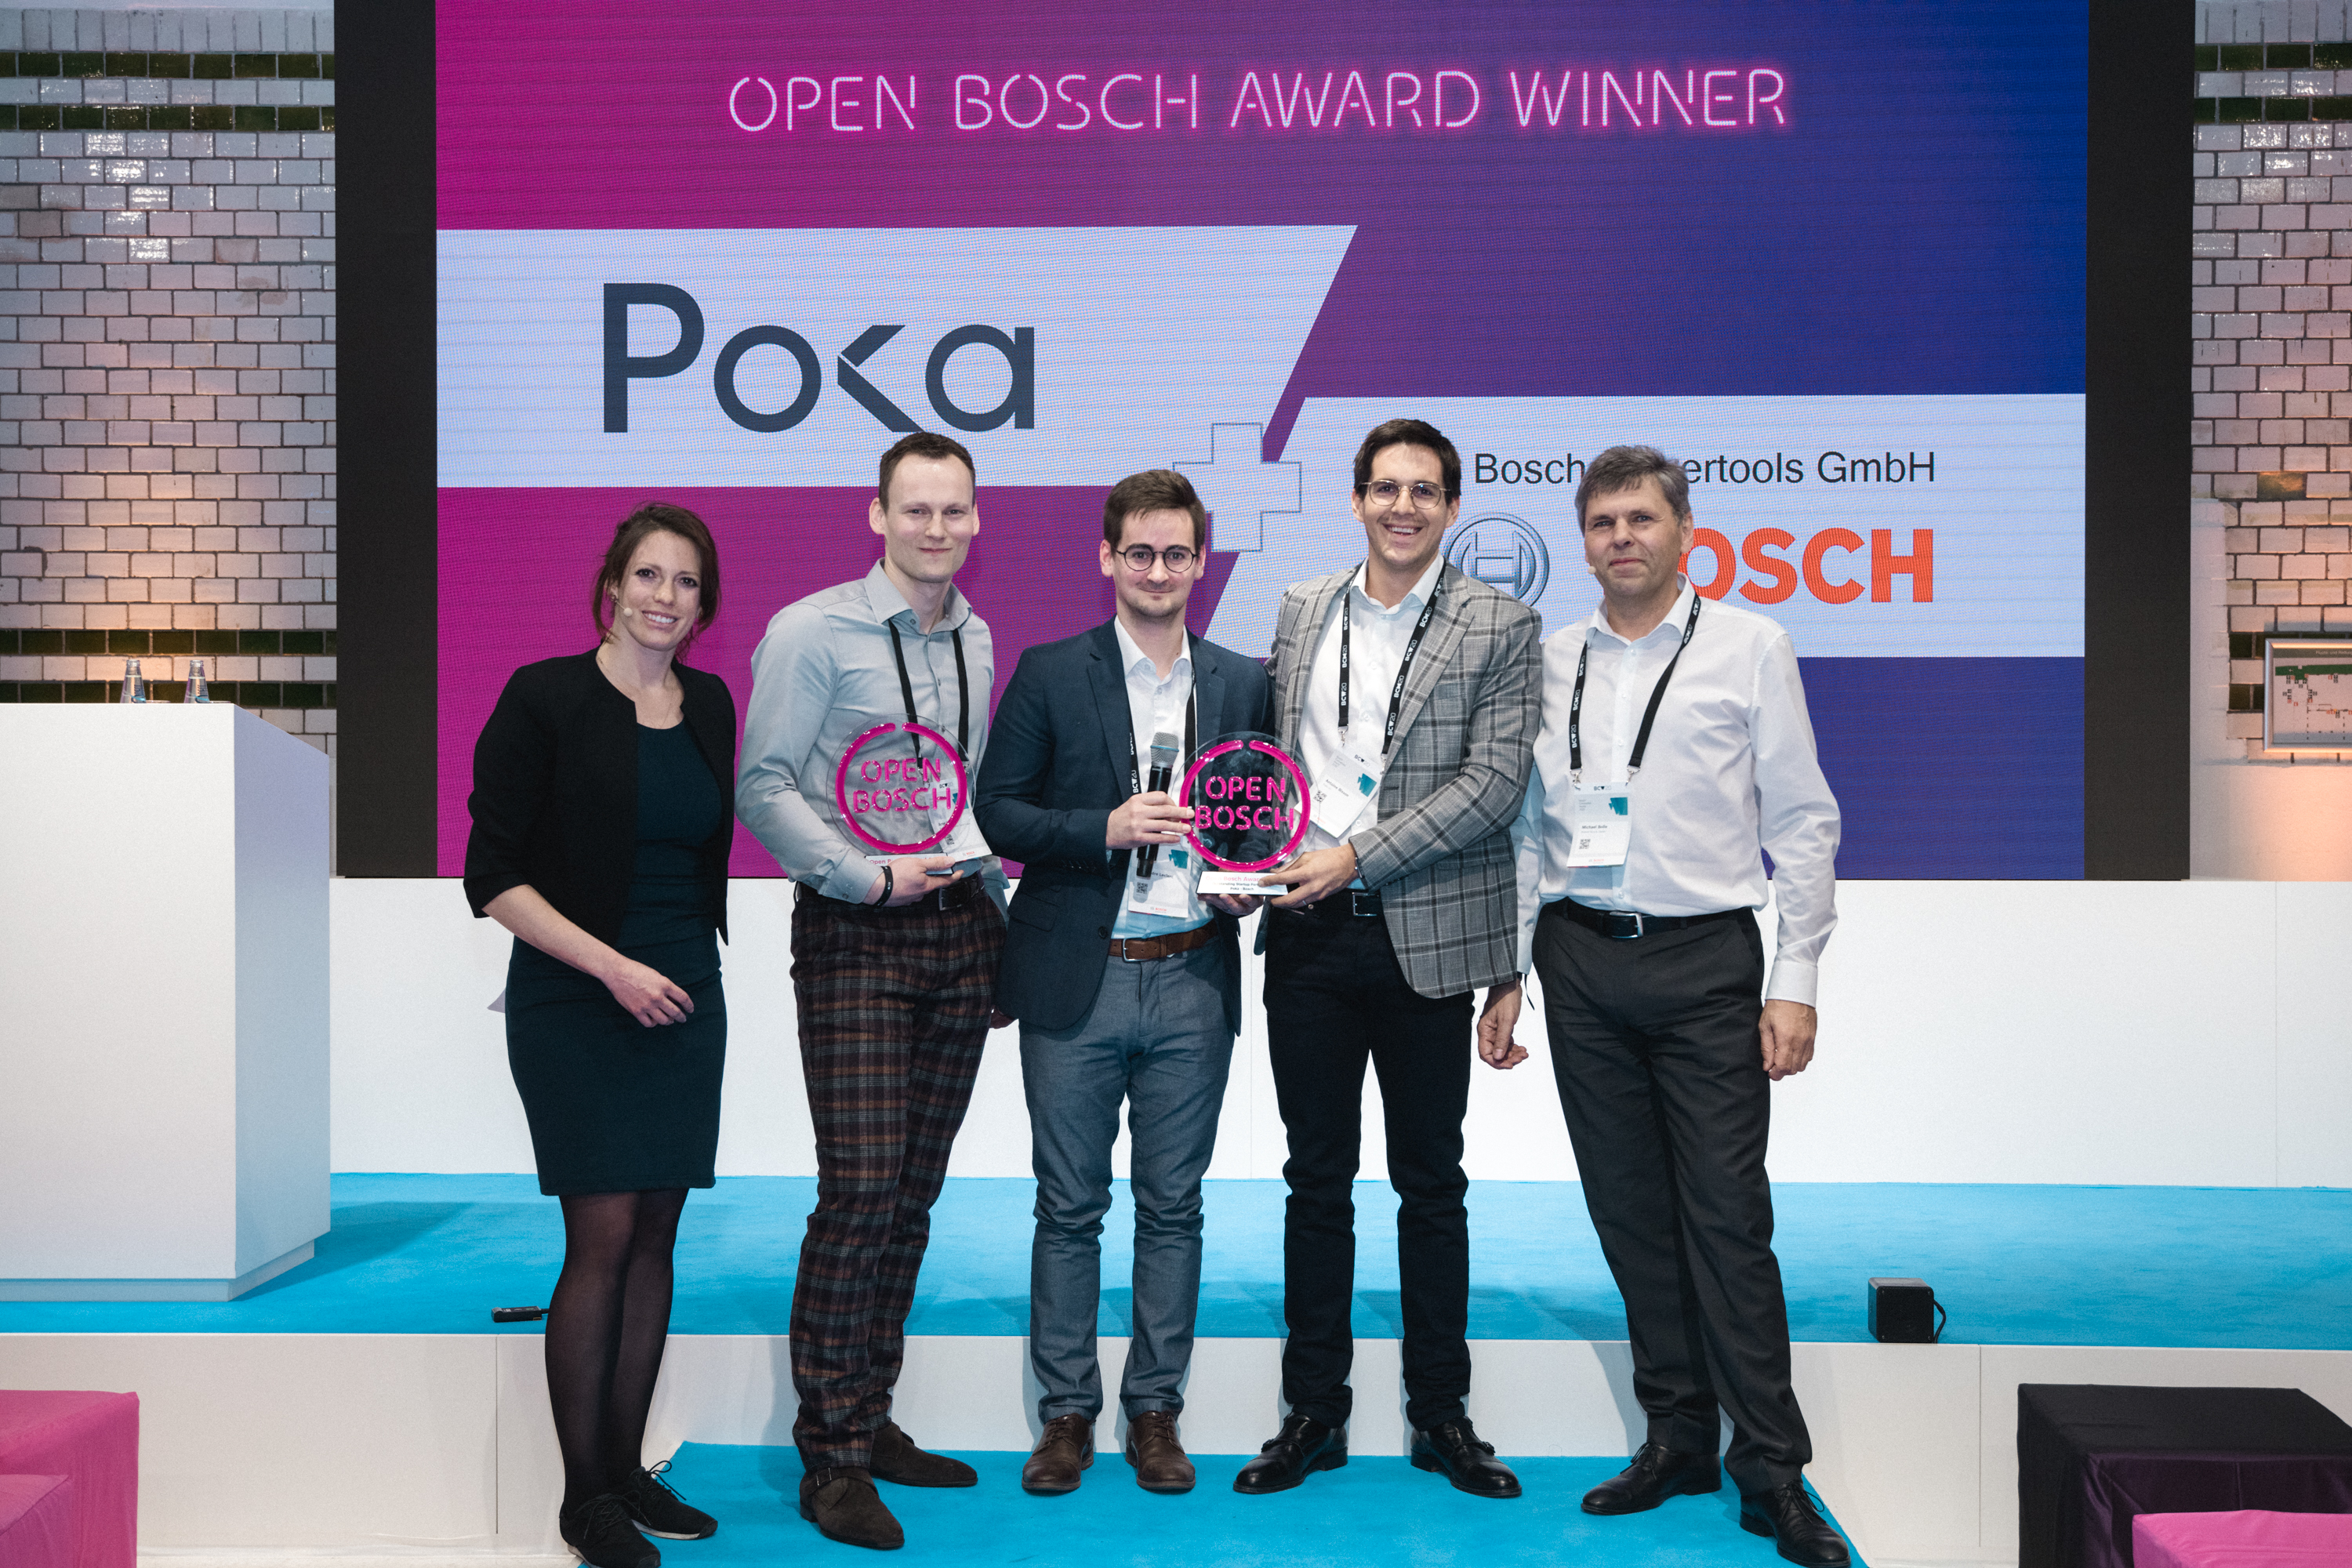 Open Bosch Award 2020 Winner – Poka and Bosch Power Tools